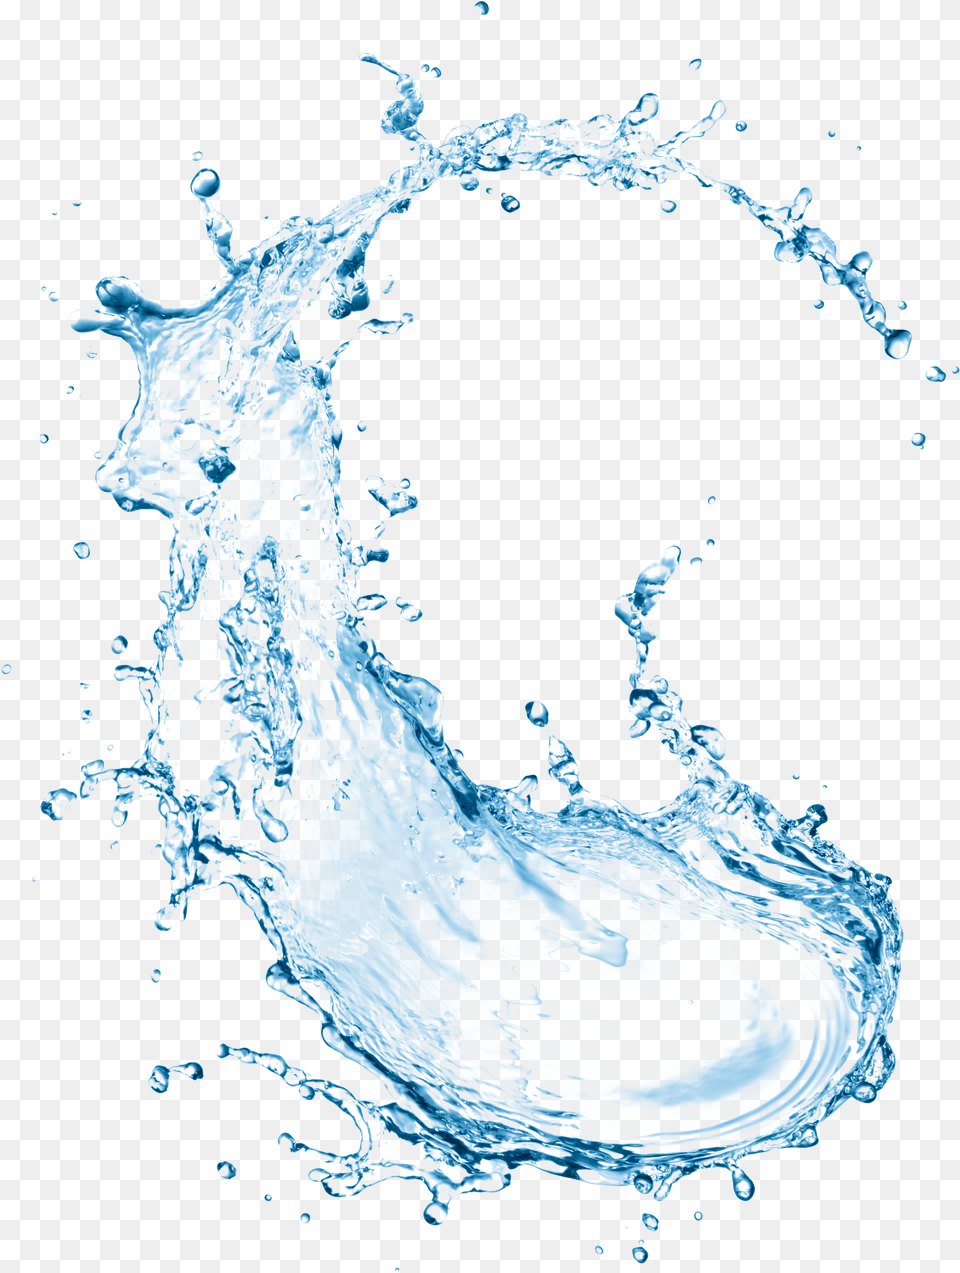 Water Water Drops Image Transparent Background Water Splash Png